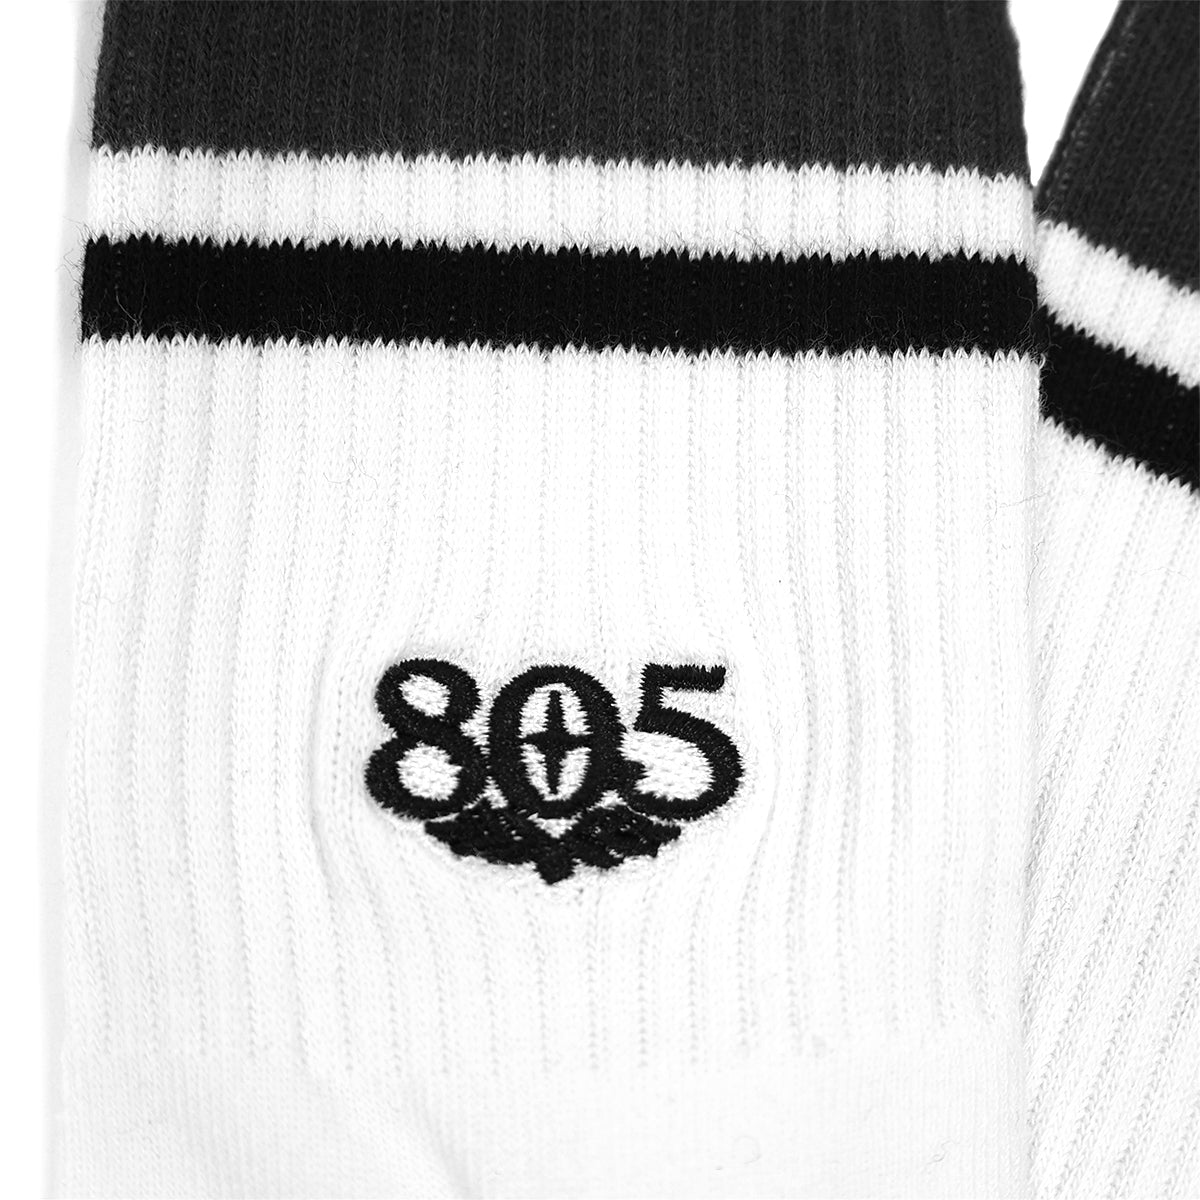 805 Classic Crew Sock